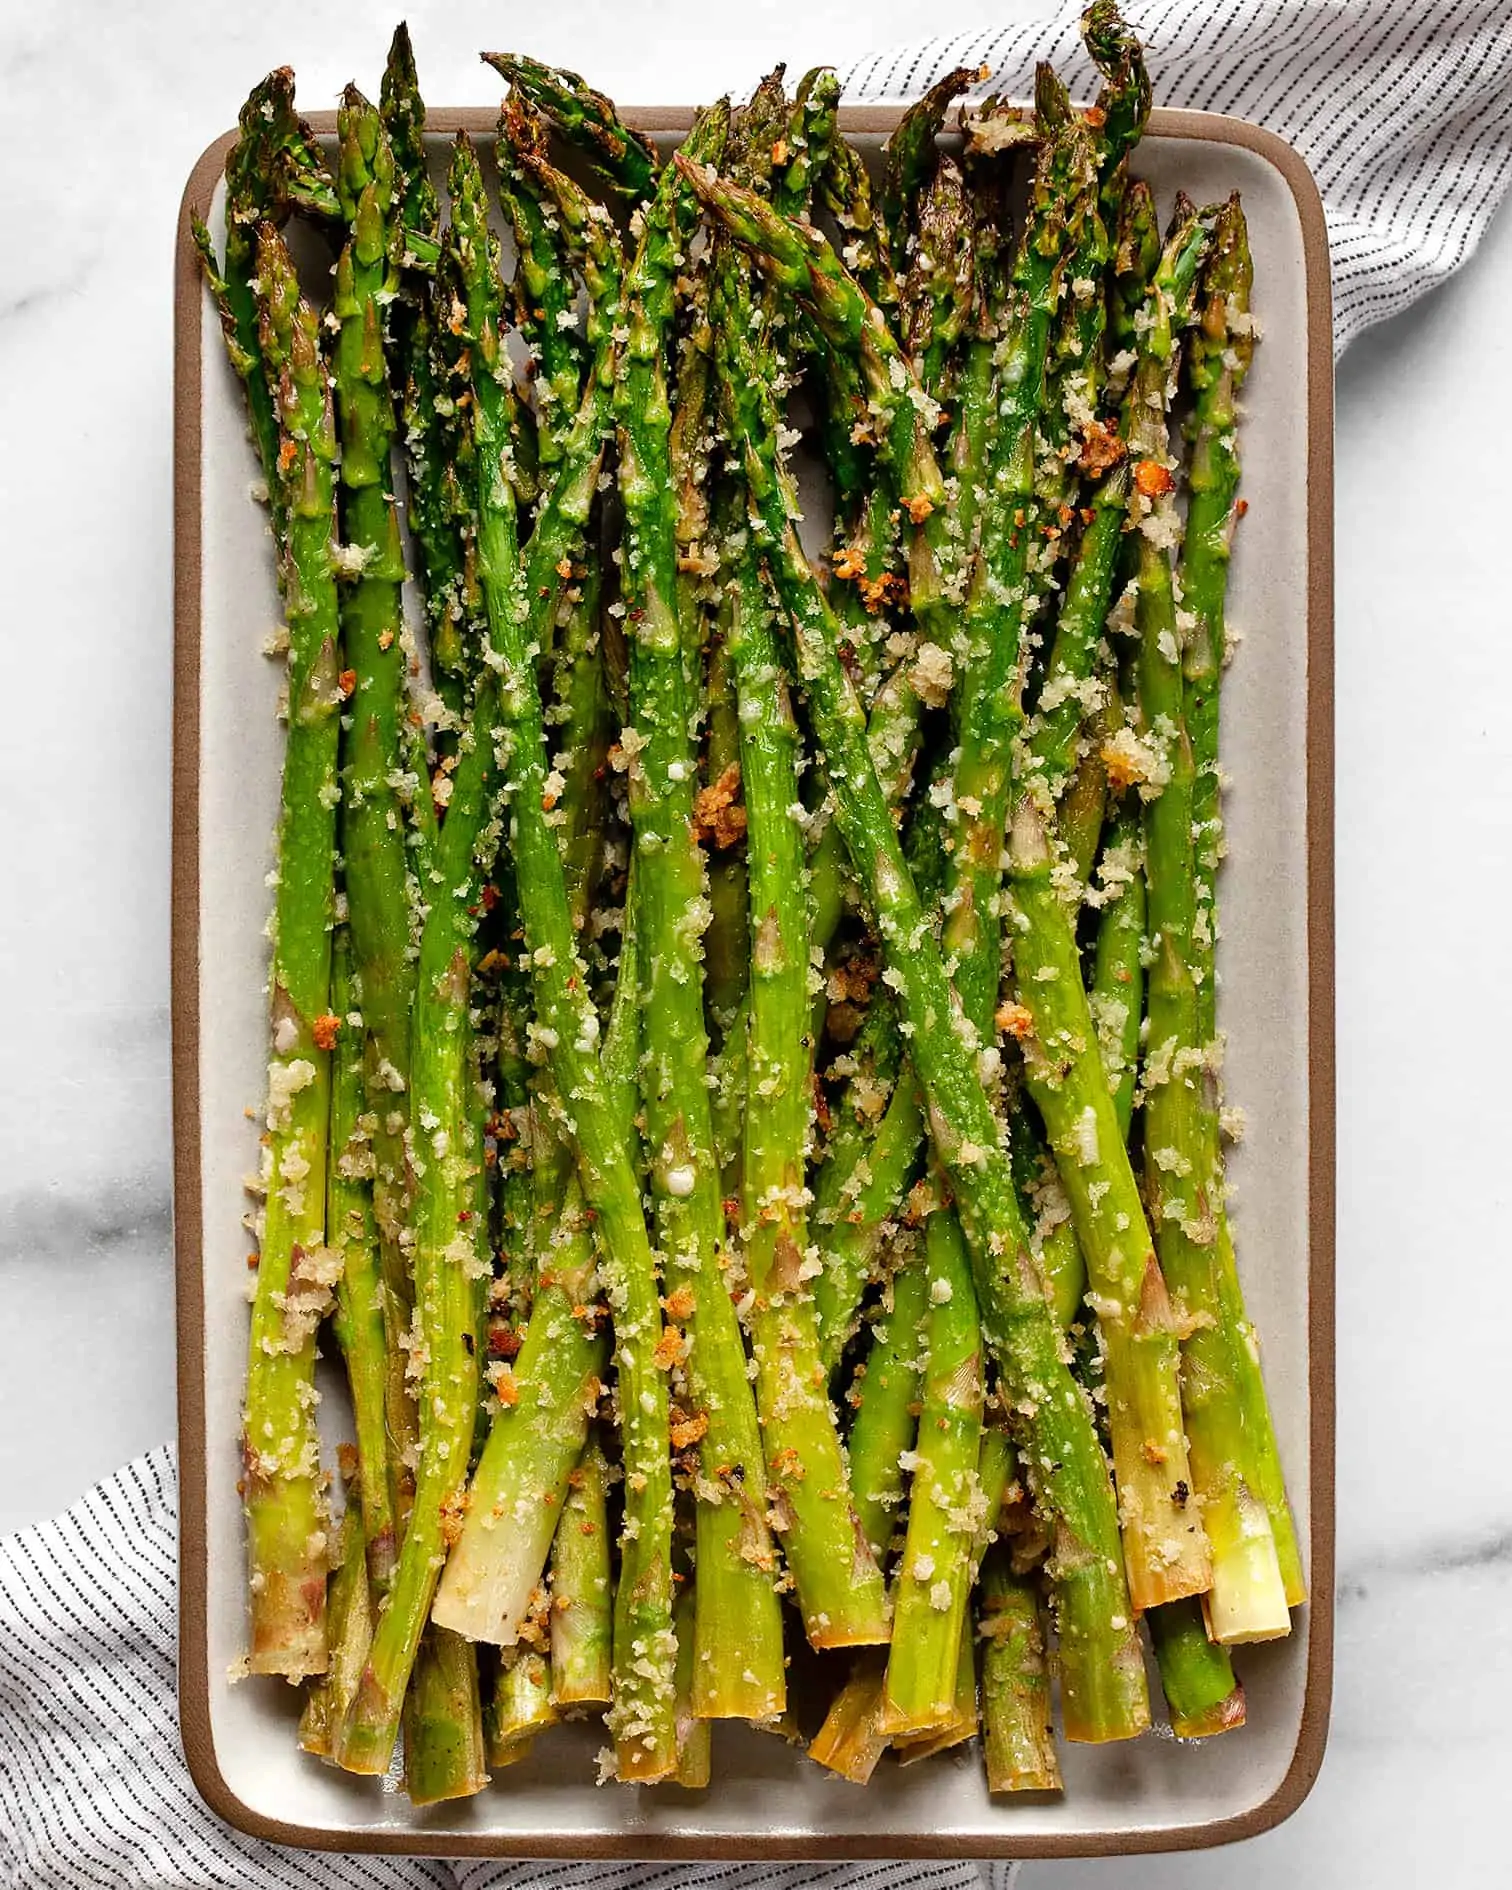 Parmesan roasted asparagus on a plate.